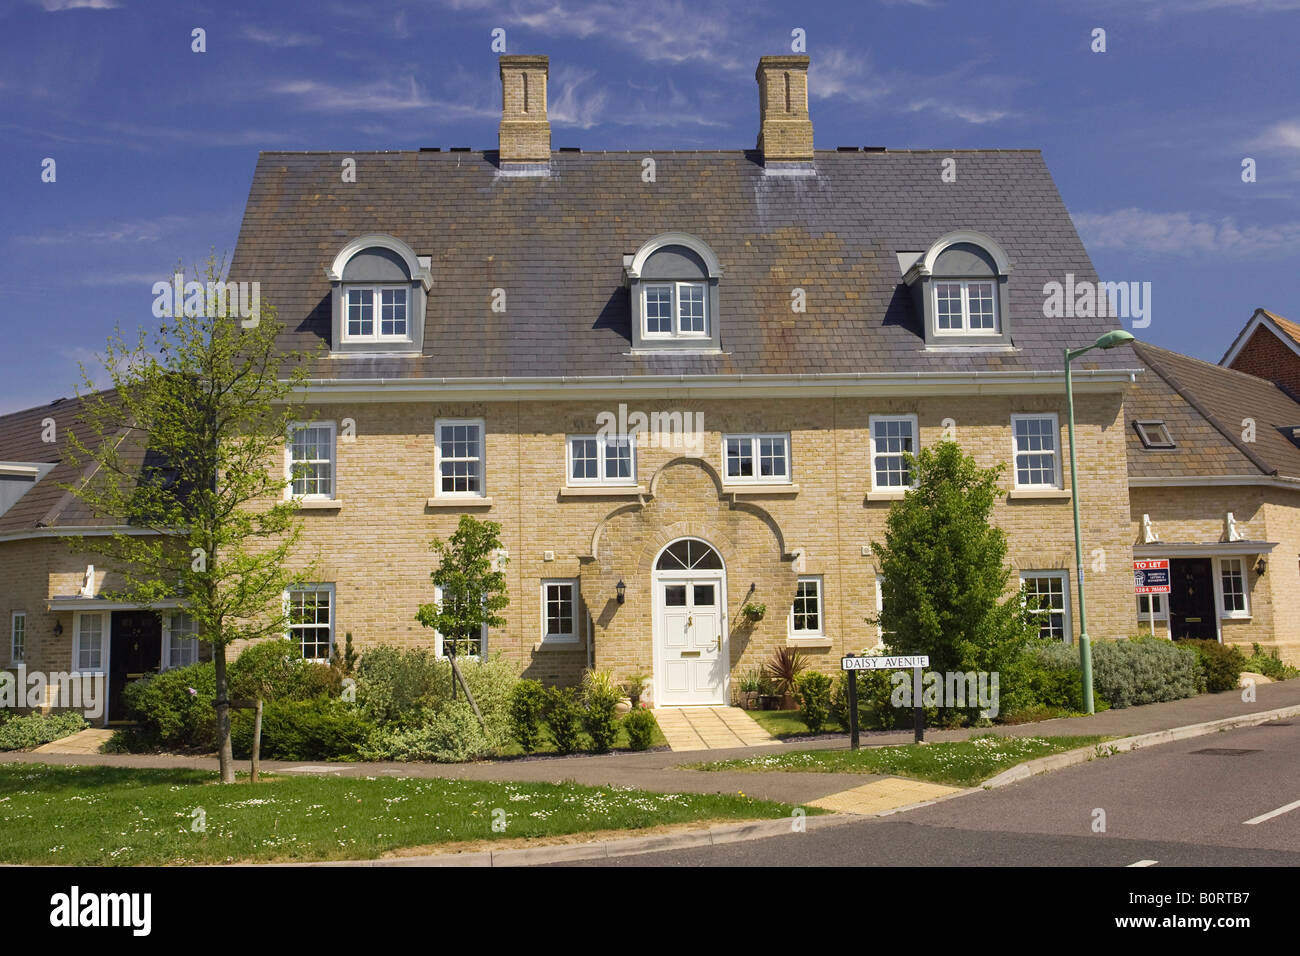 Casa en Avenida newbuilt Daisy en Bury St Edmunds en Suffolk UK Foto de stock